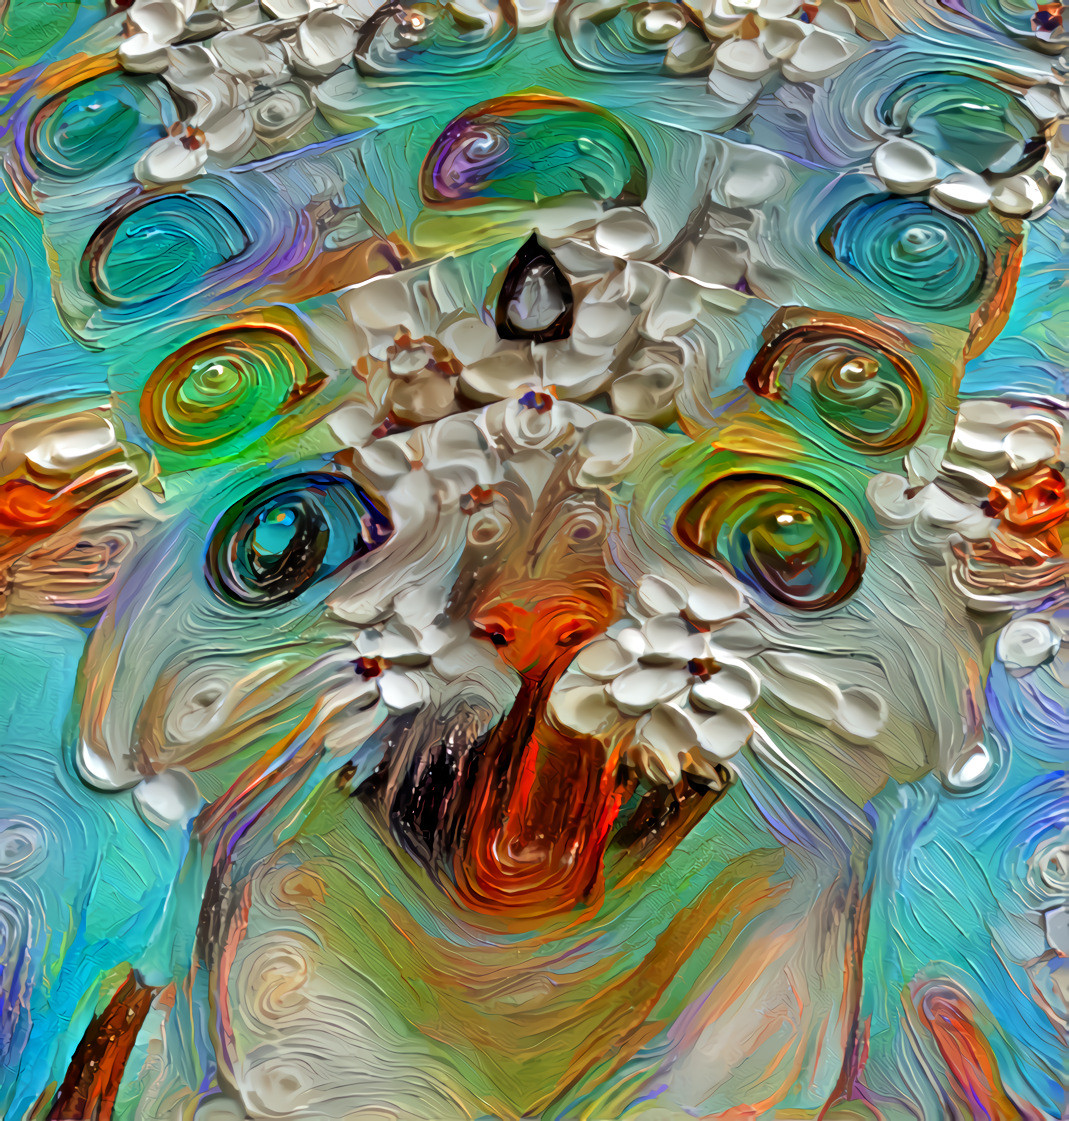 Psycat